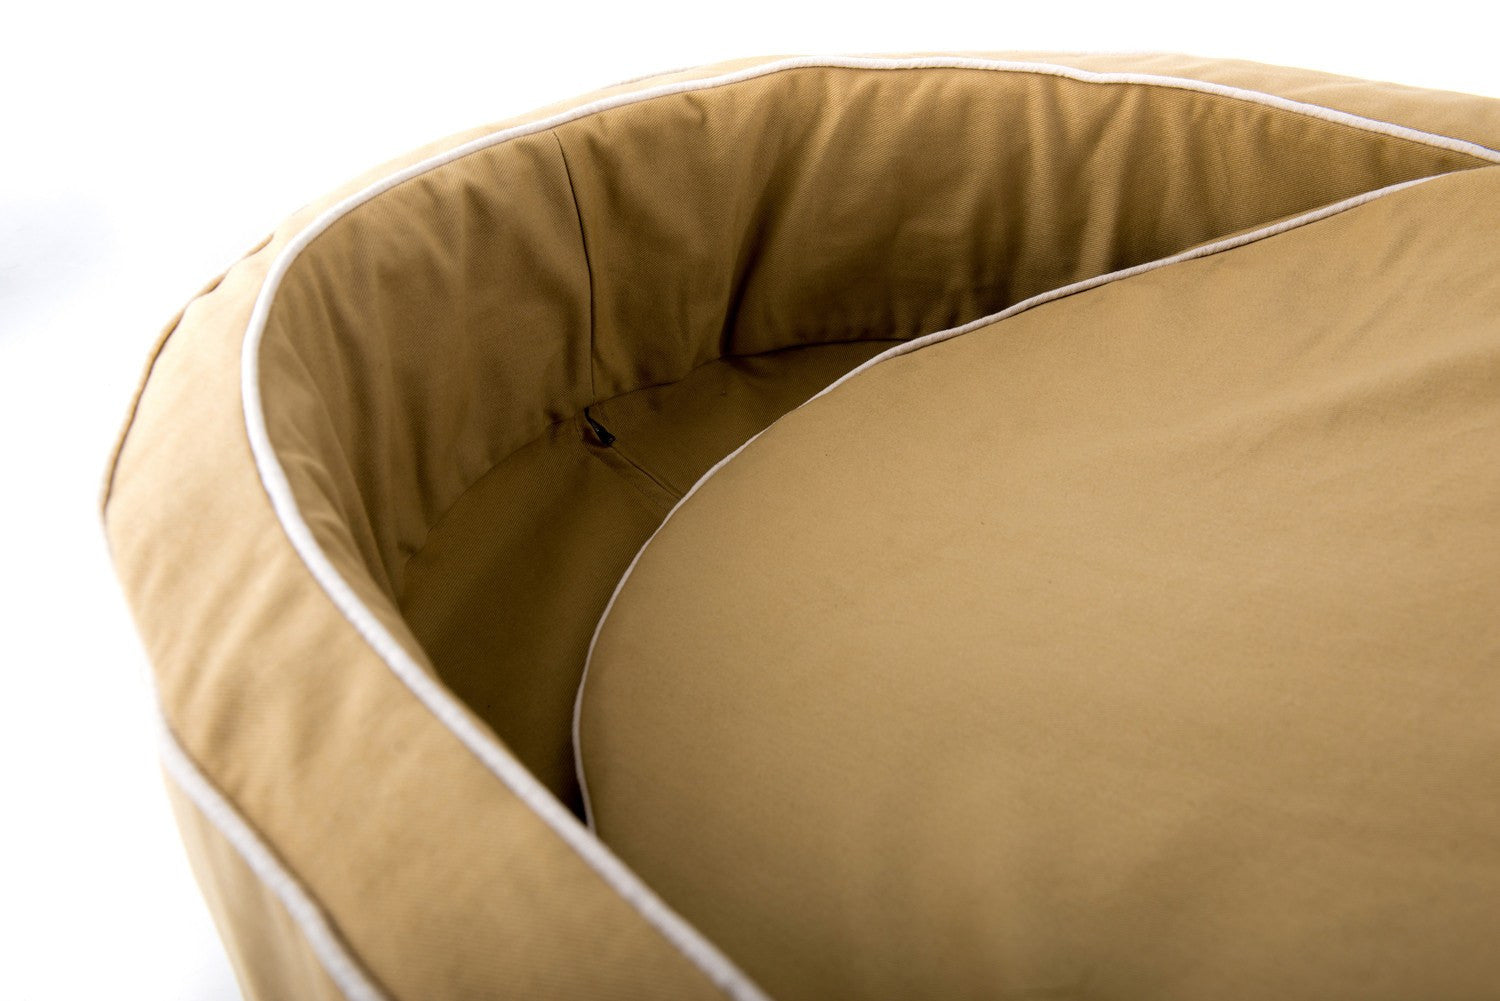 Interior cushion of natural Nest dog bed made of organic British Lambs wool and materials. Made in Britain.